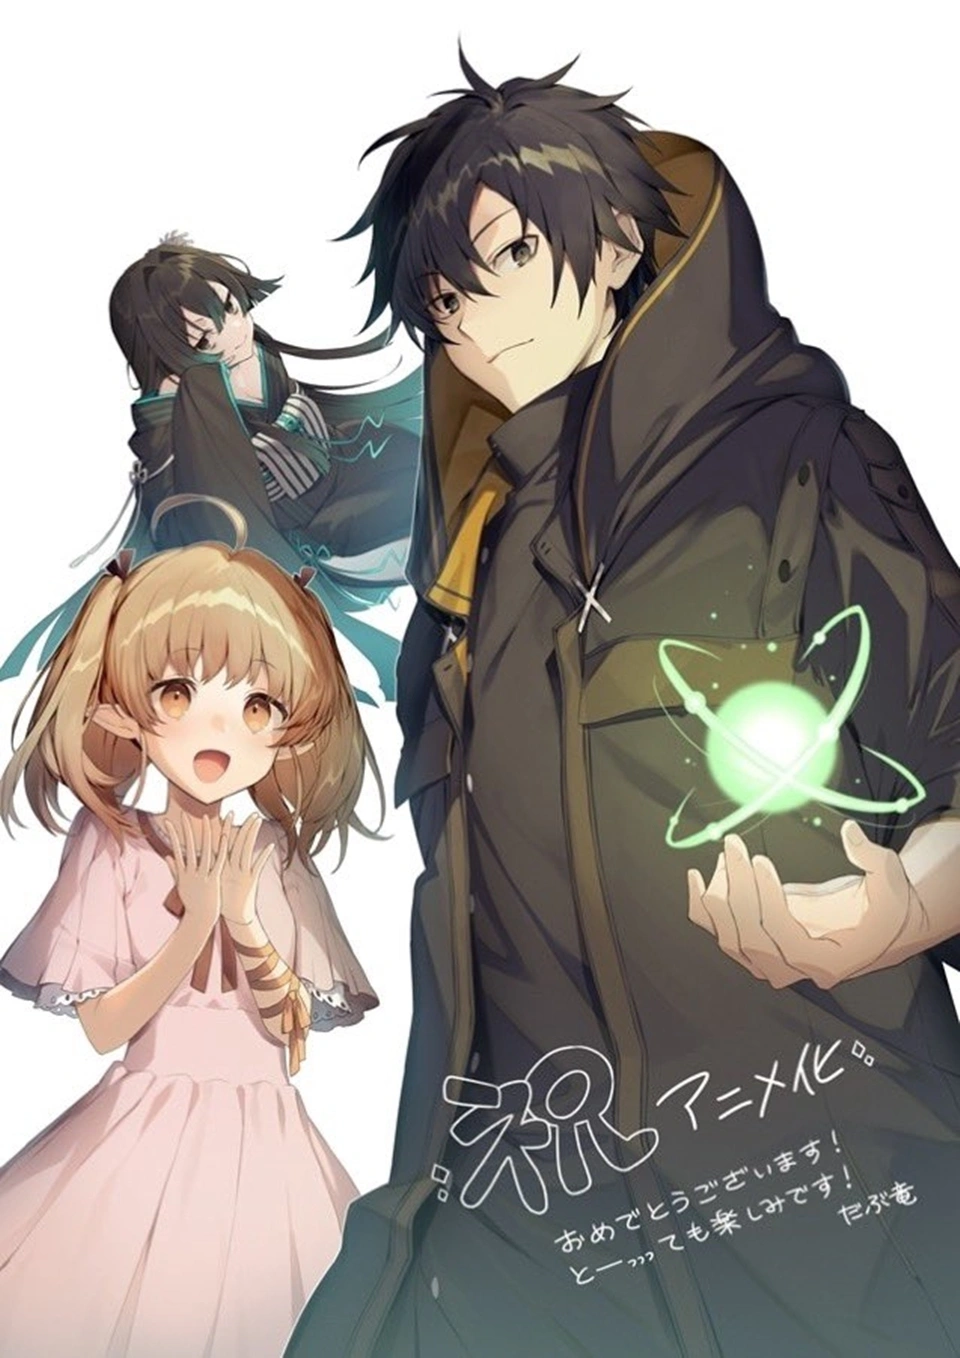 The Brilliant Healer's New Life in the Shadows Light Novel Receives an Anime Adaptation